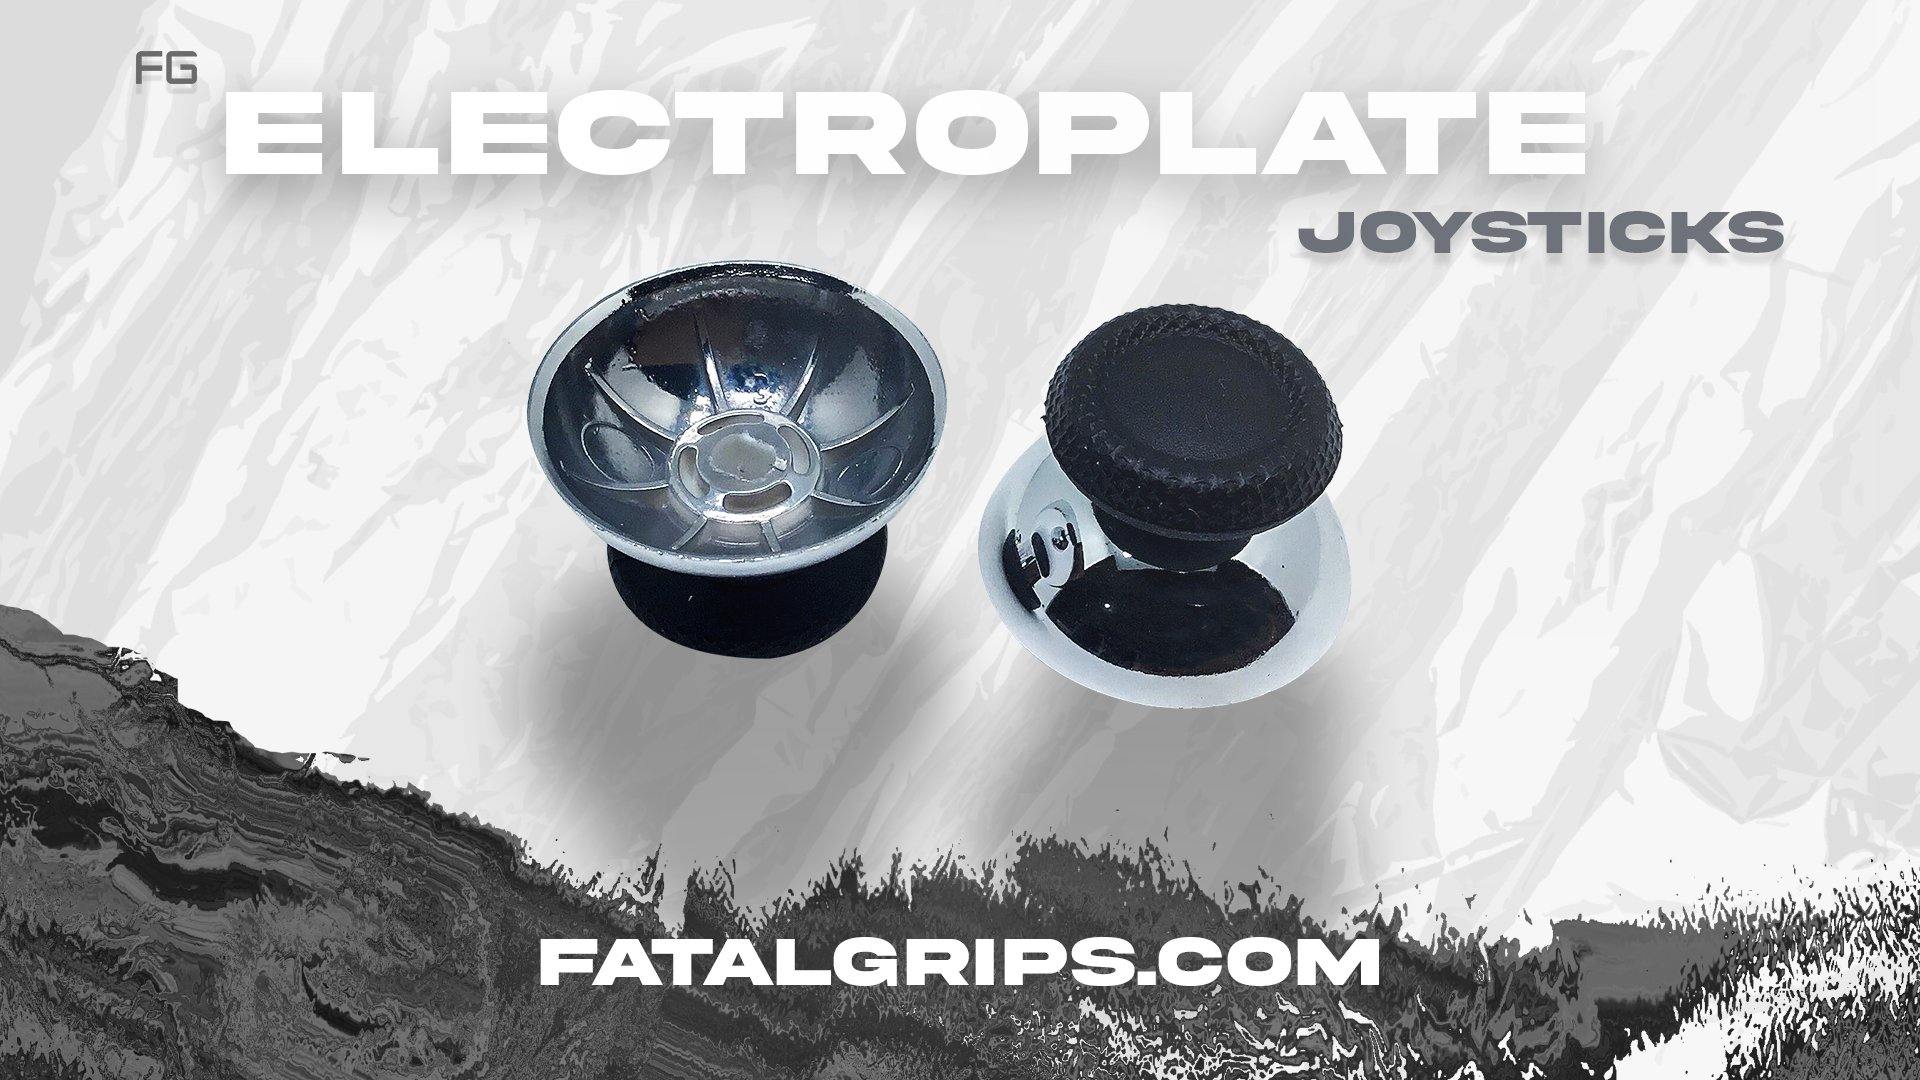 PS5 Electroplate Joysticks - Fatal Grips